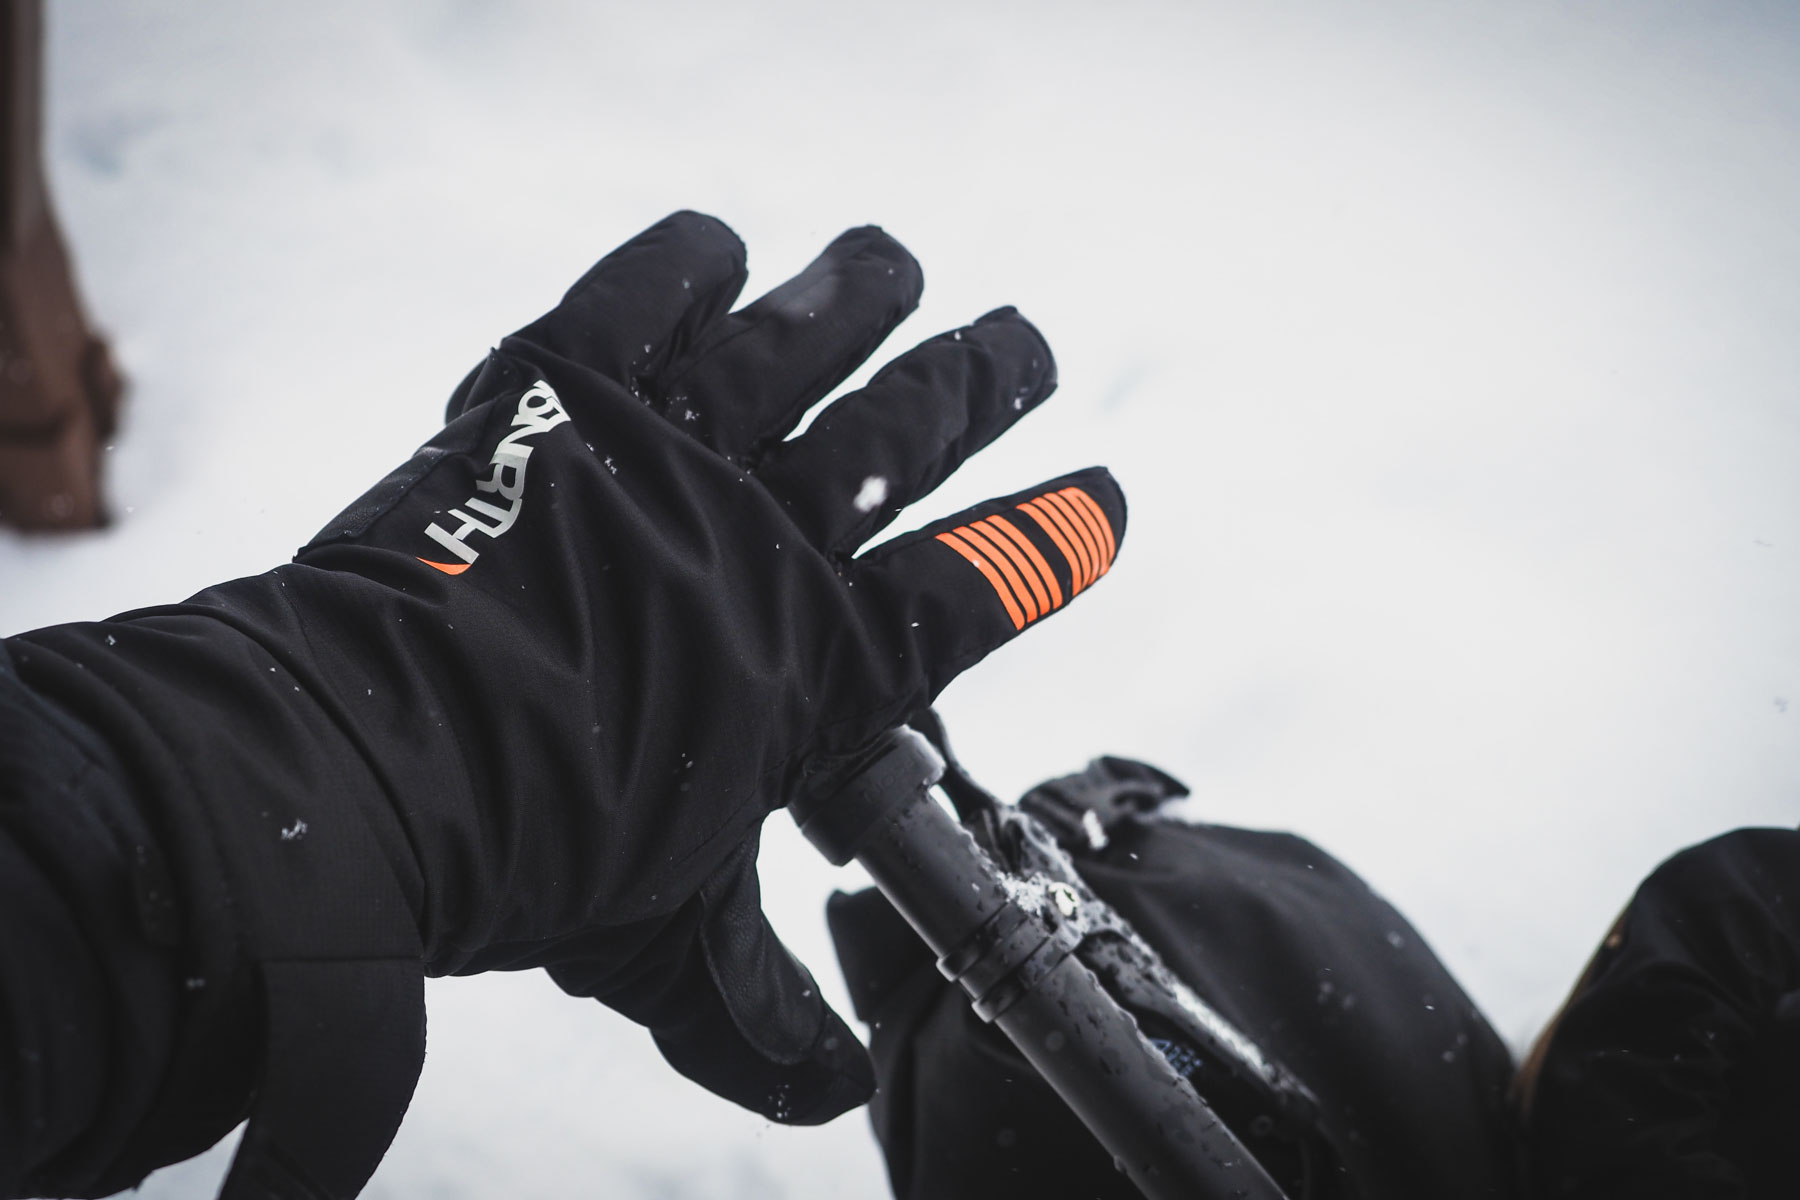 45NRTH Sturmfist 5 Gloves Review